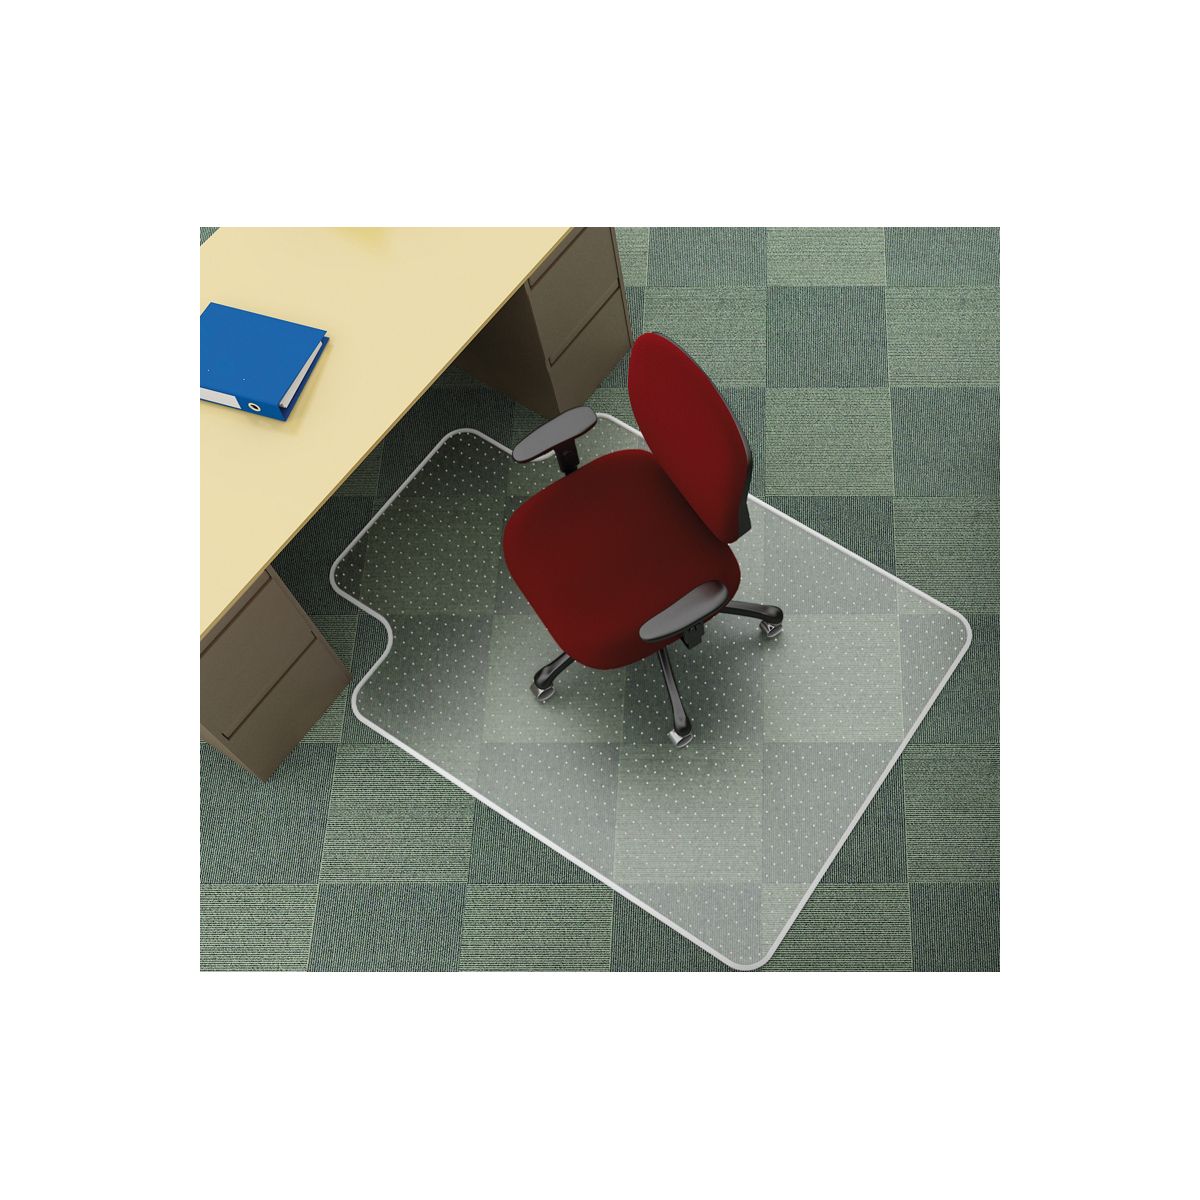 Mata pod krzesło Q-Connect na dywany 120 x 90 cm (KF02255)